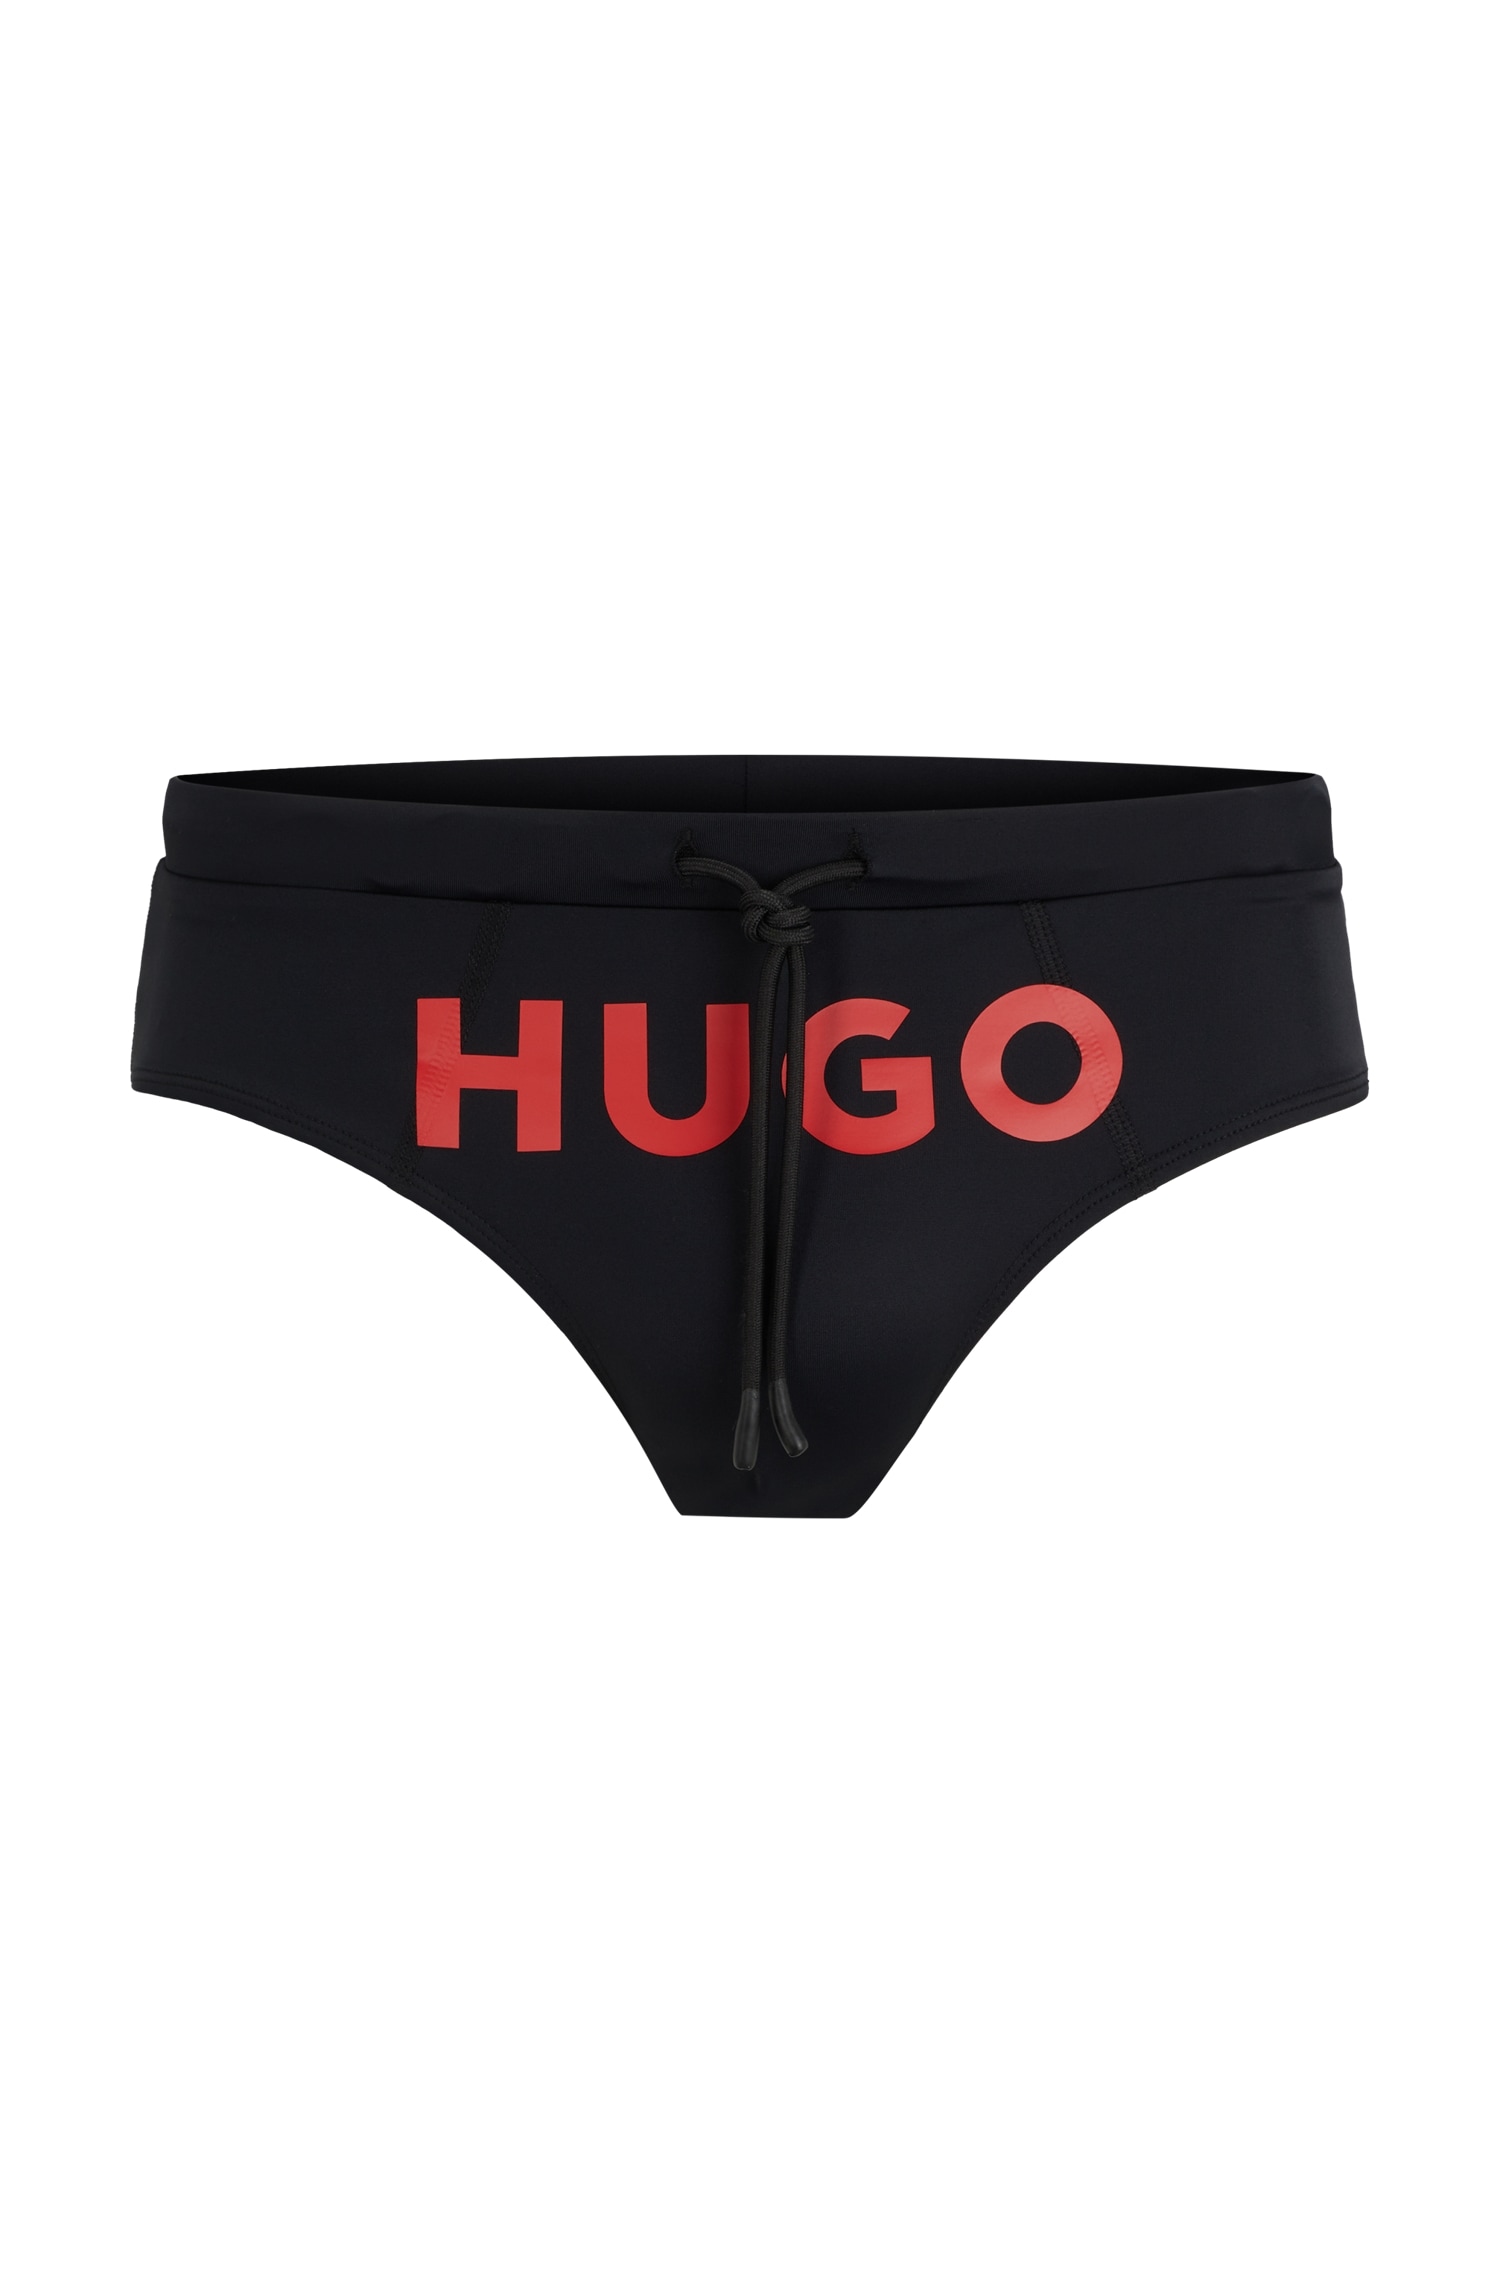 HUGO Underwear Badehose »LAGUNA«, mit grossem kontrastfarbenem HUGO Logo-Schriftzug